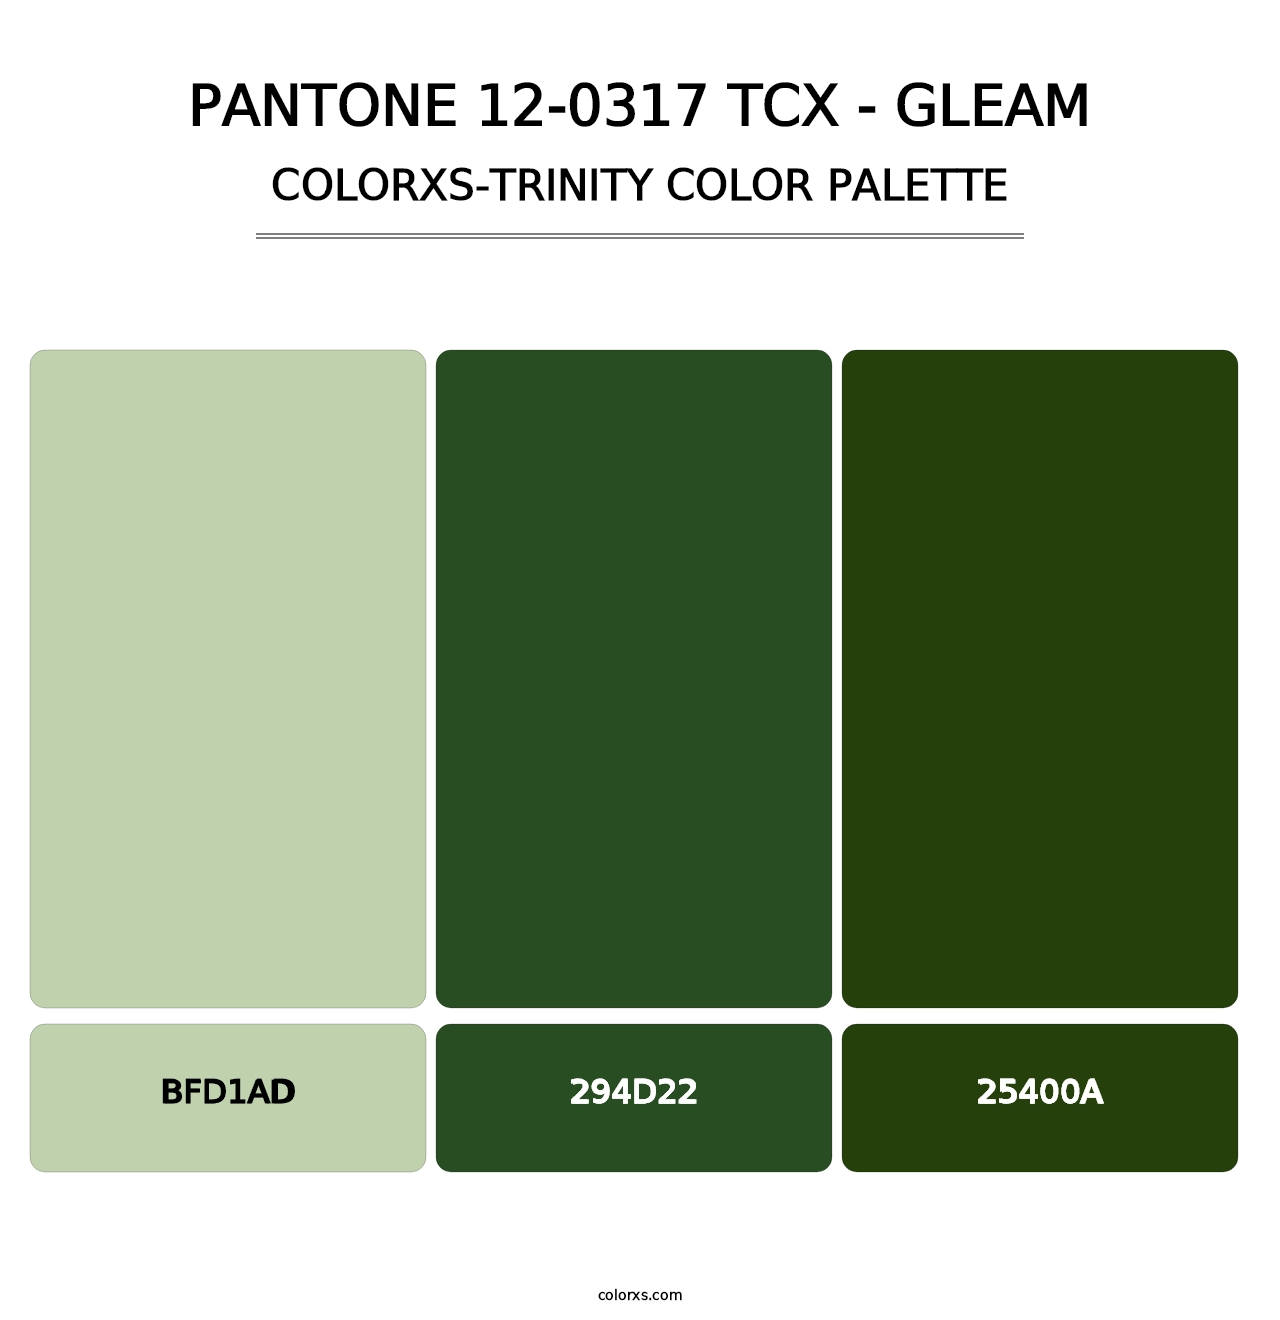 PANTONE 12-0317 TCX - Gleam - Colorxs Trinity Palette